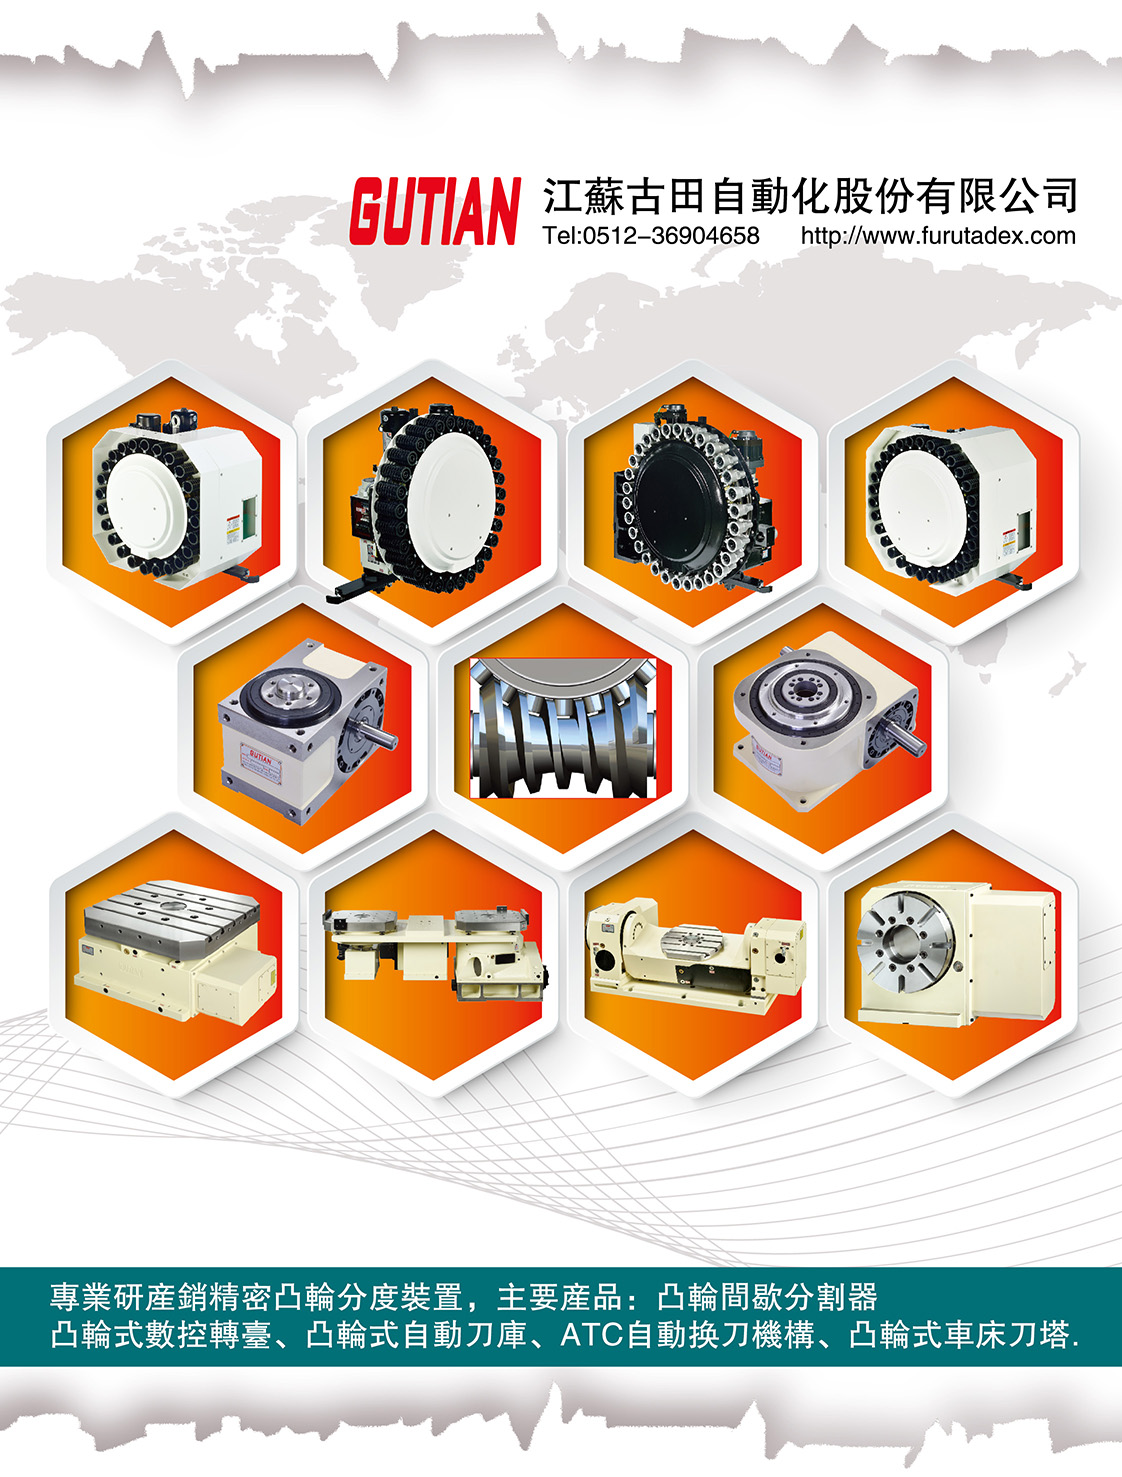 SUZHOU GUTIAN AUTOMATION TECHNOLOGY CO., LTD.